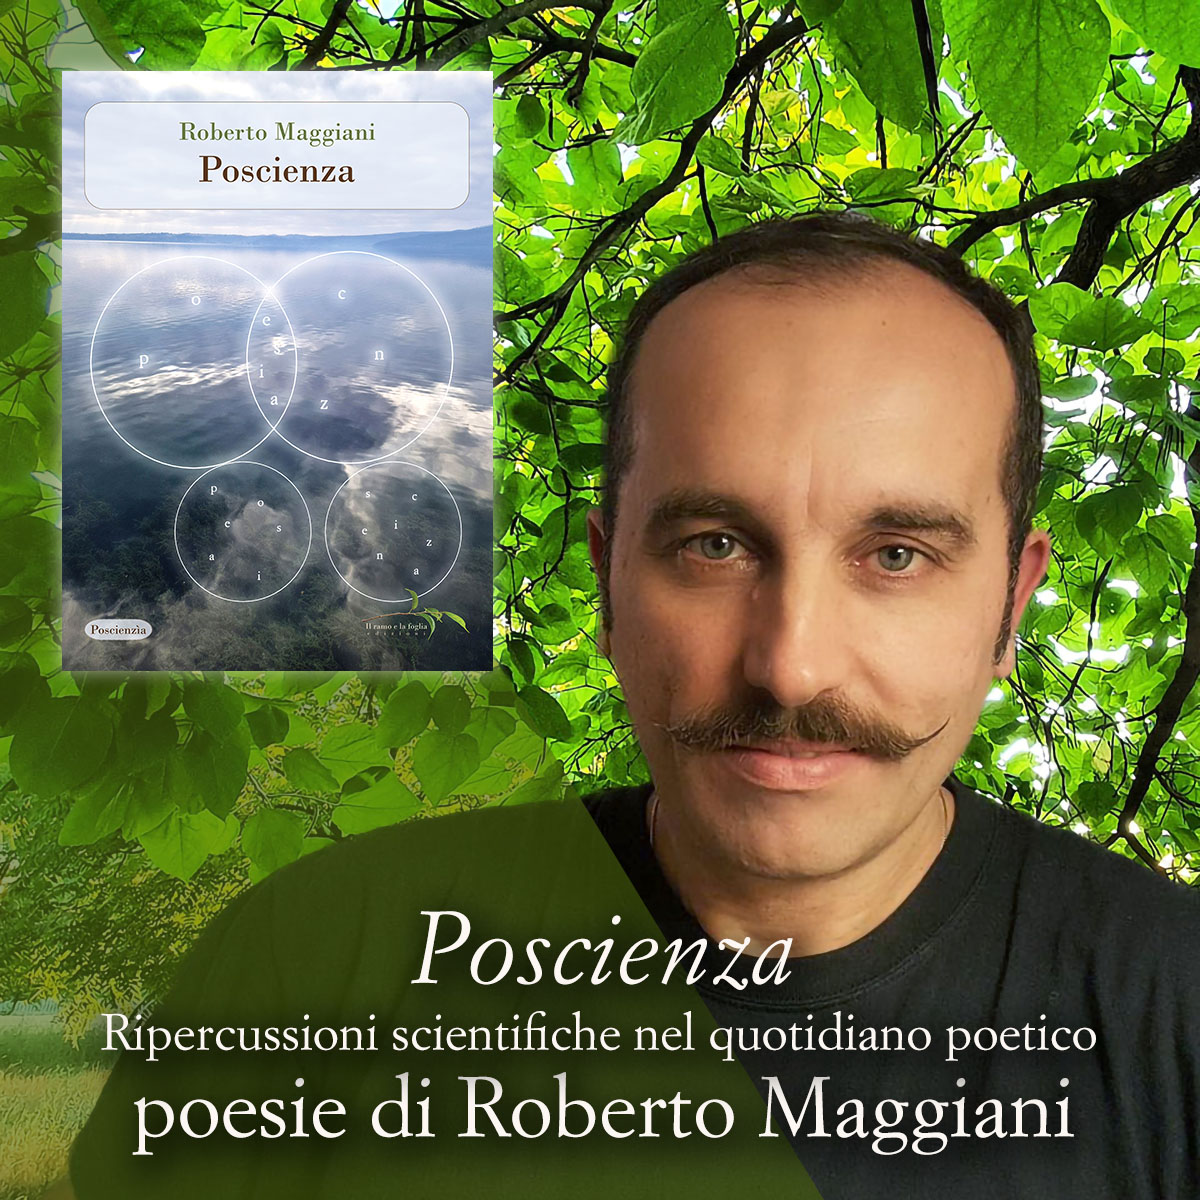 Roberto Maggiani